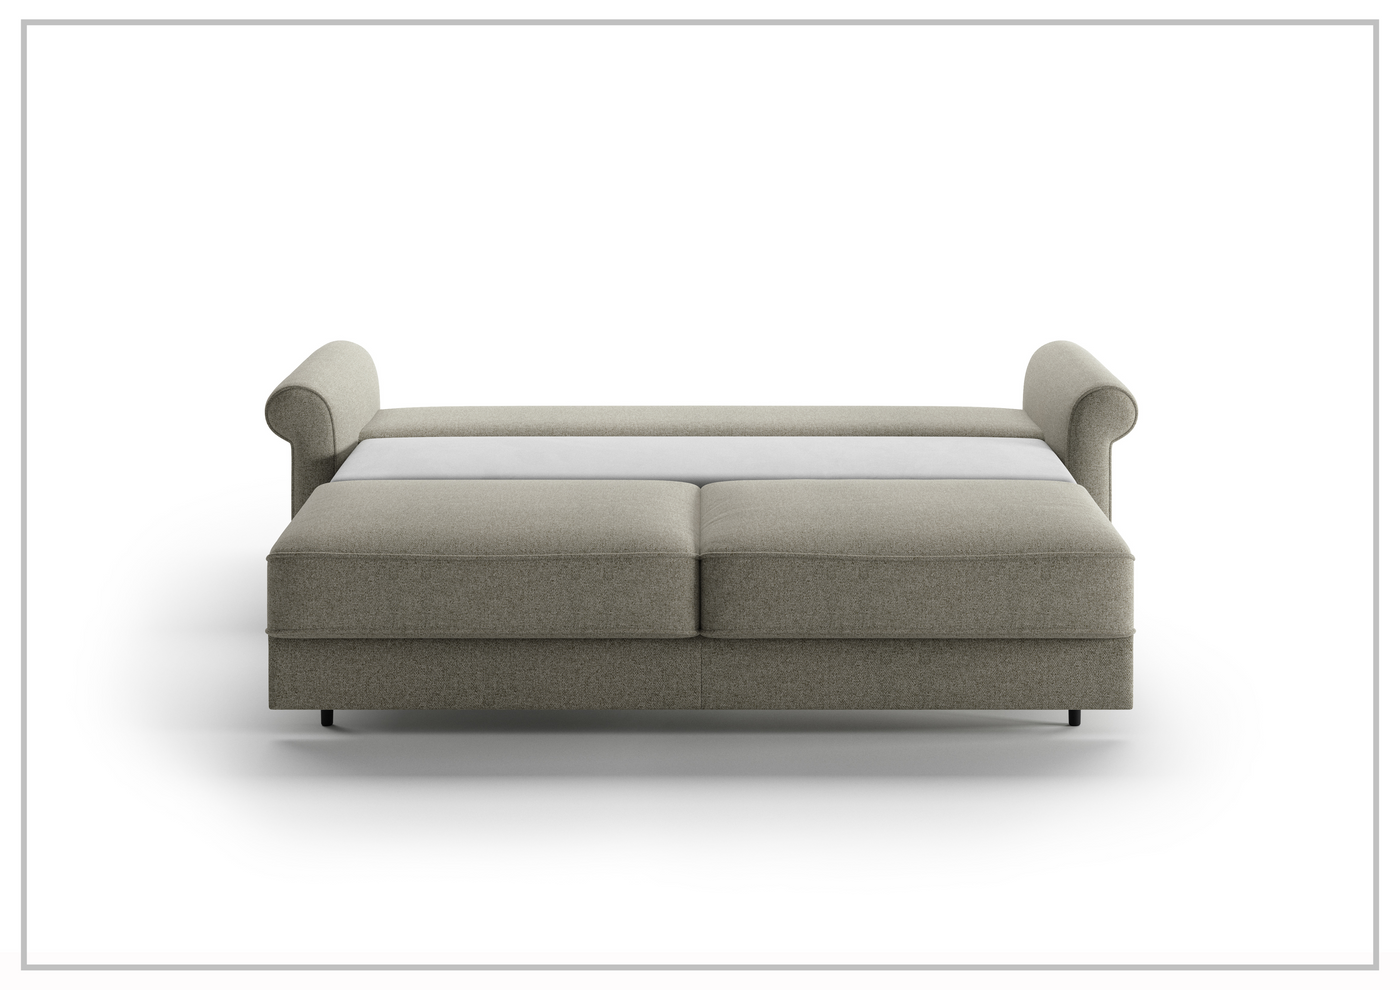 Luonto Casey Fabric King Sofa Sleeper with Hybrid Function